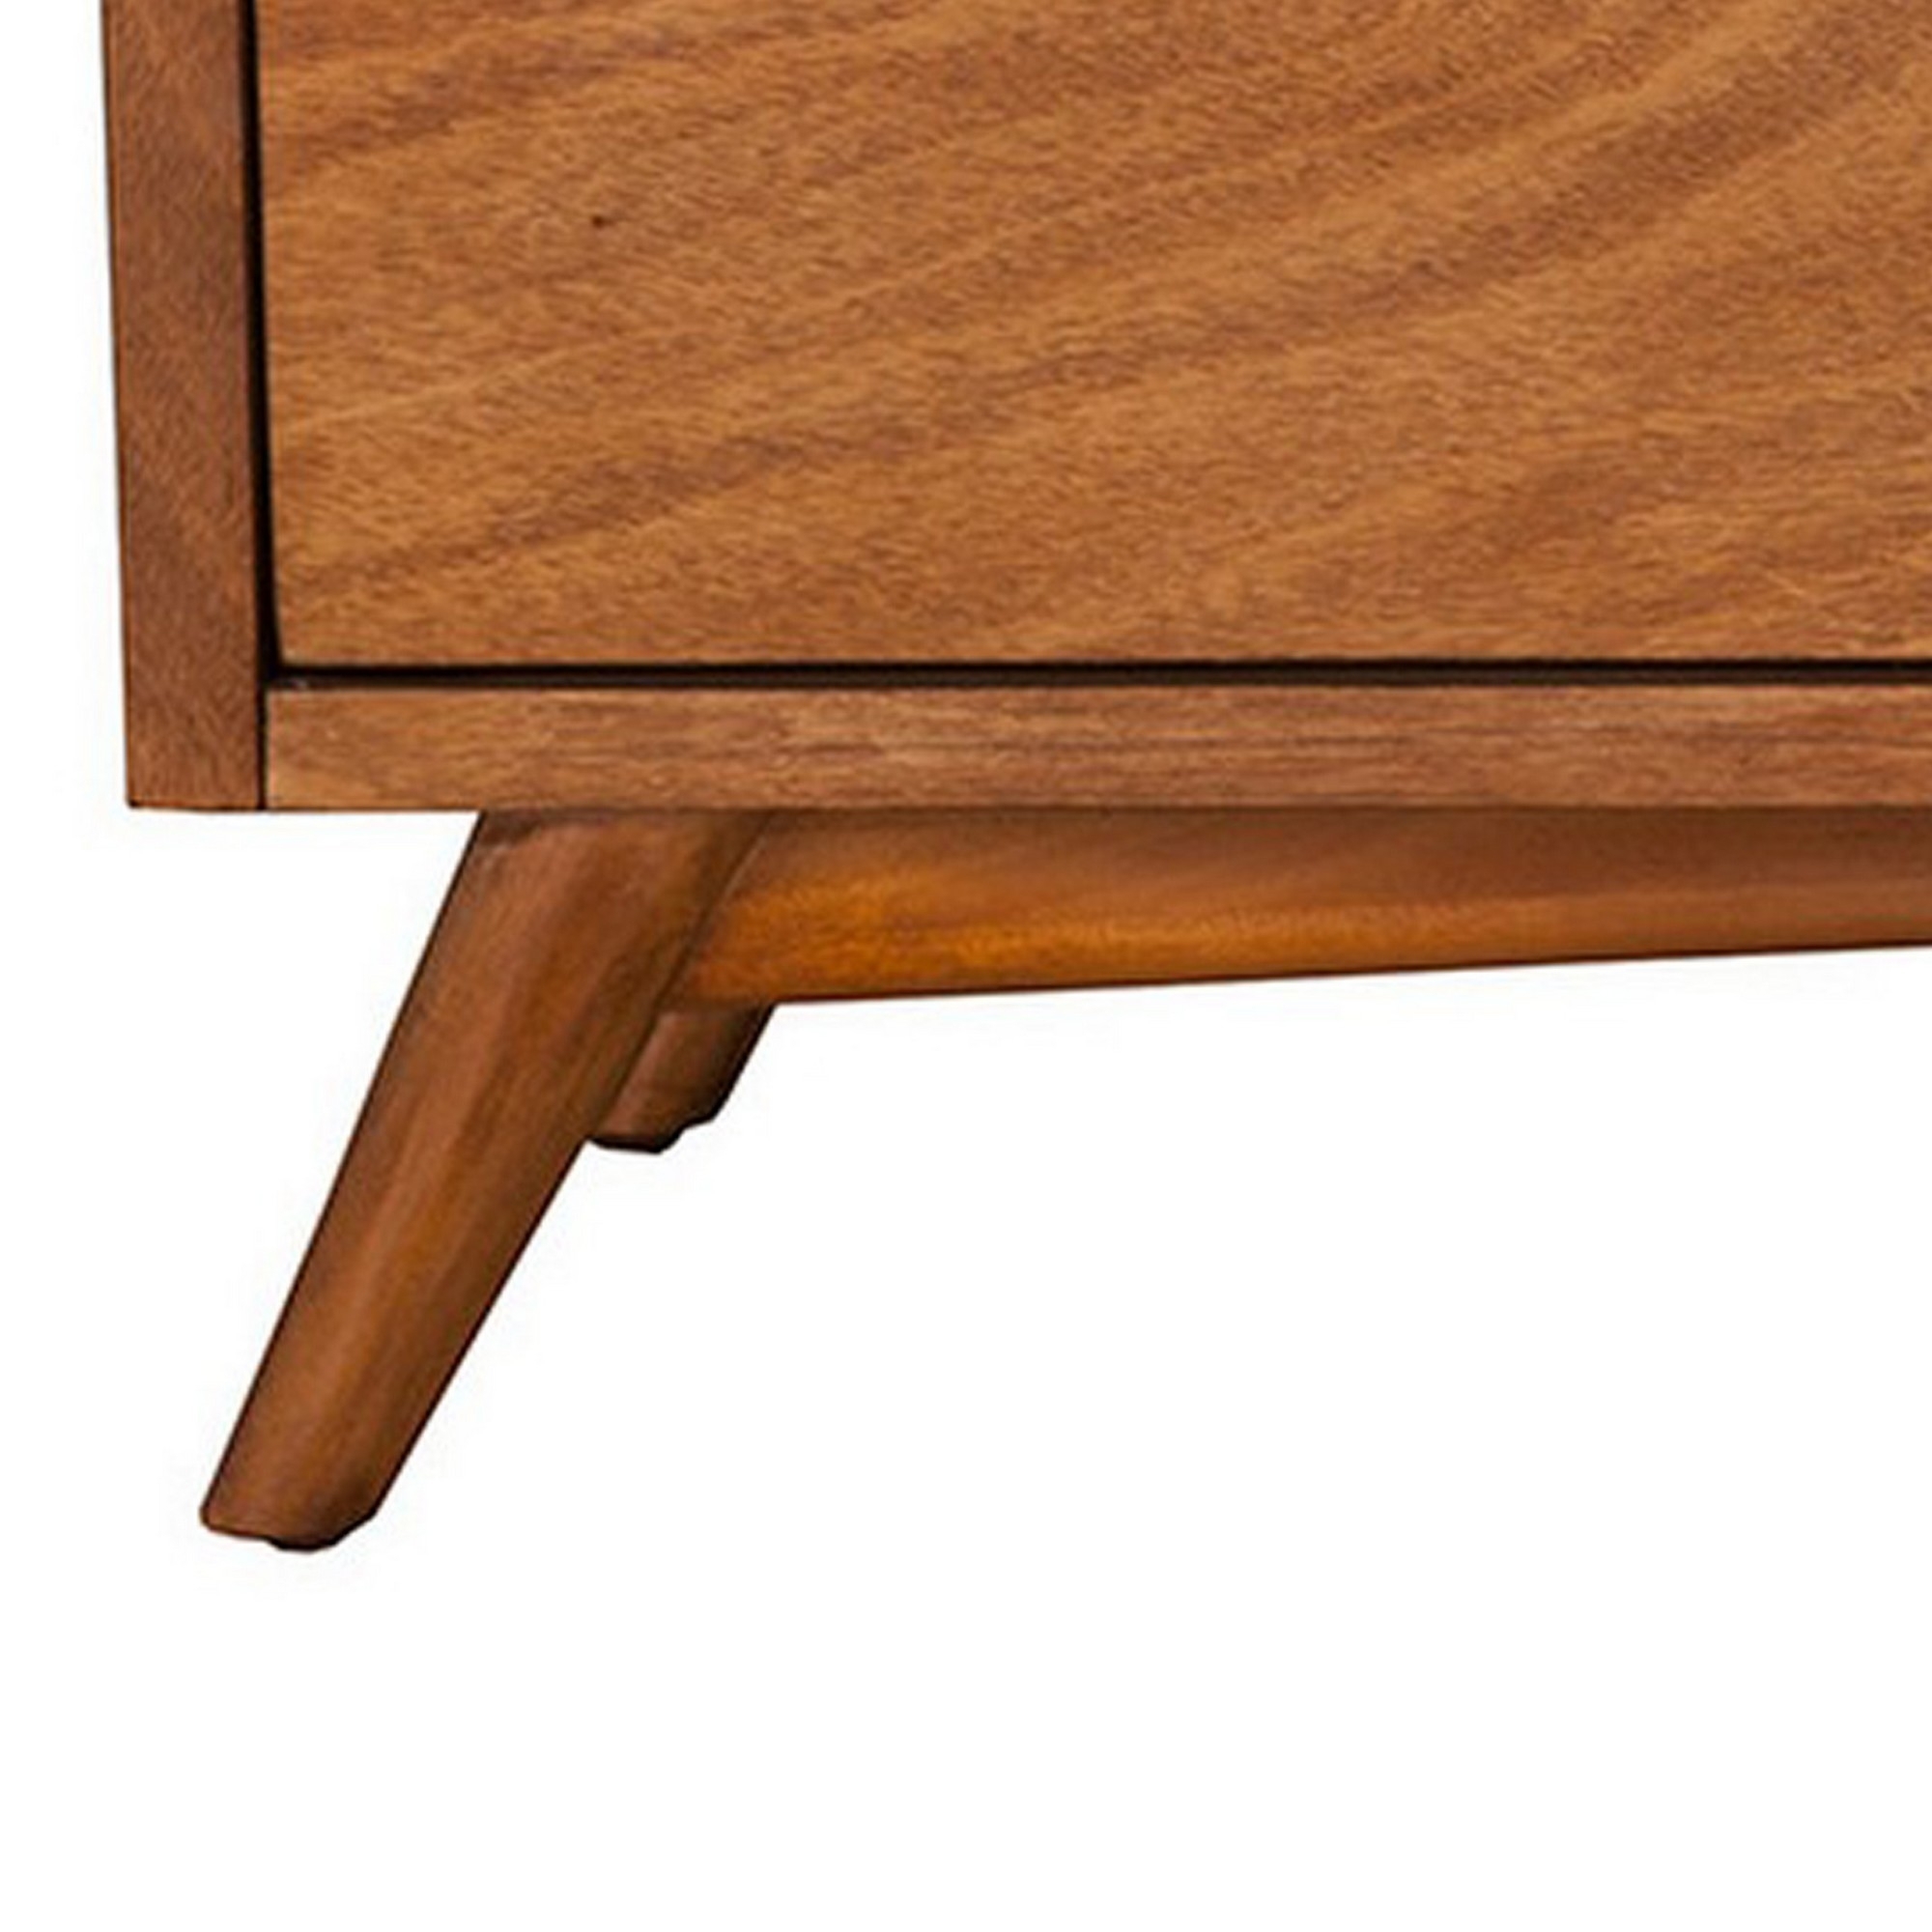 Ian 59 Inch 2 Drawer Storage Bench, Padded Seat, Beige Fabric, Acorn Brown- Saltoro Sherpi